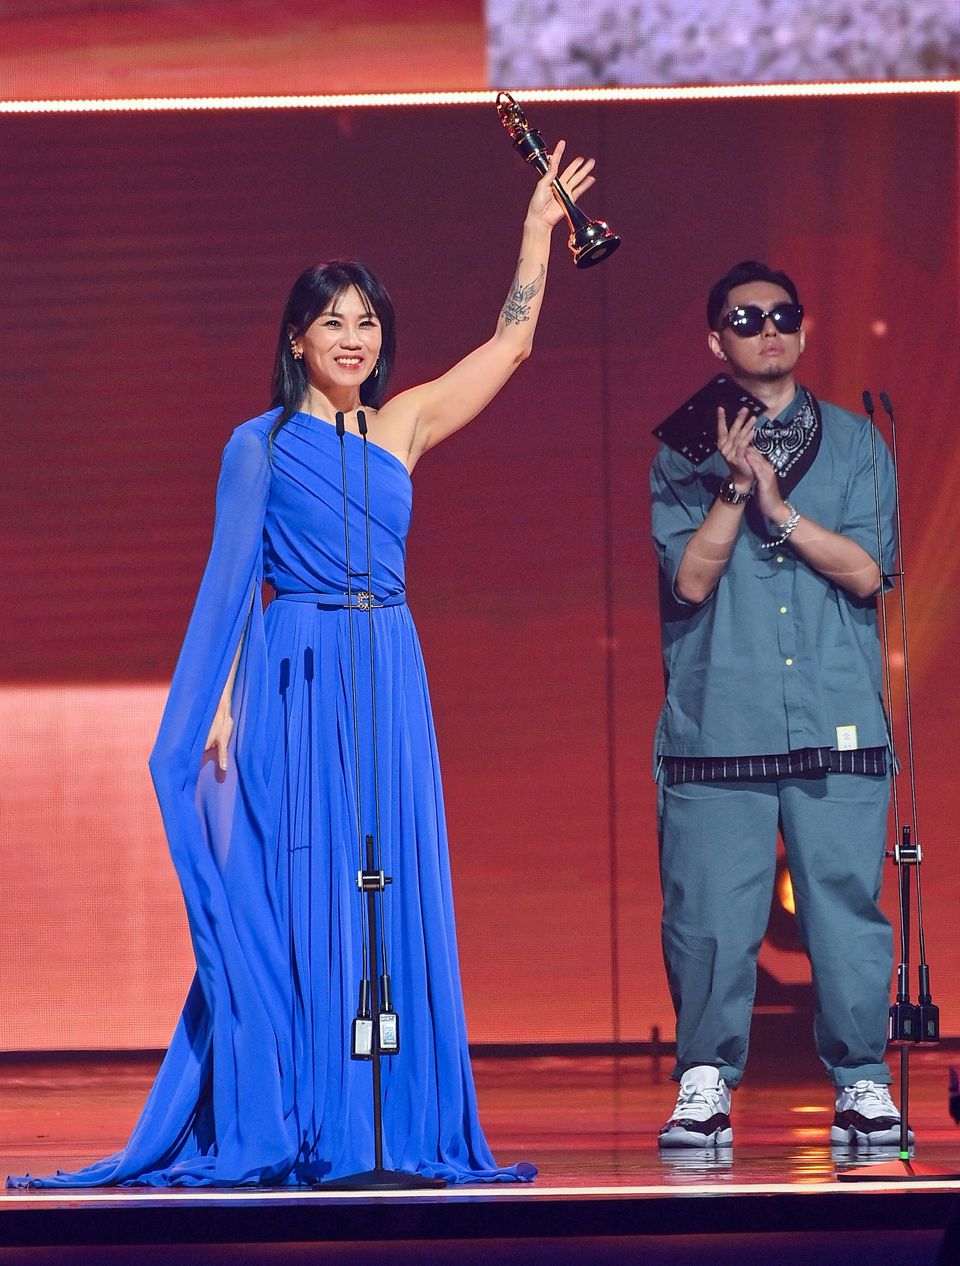 Big wins for veteran Singapore singer at Taiwan music awards